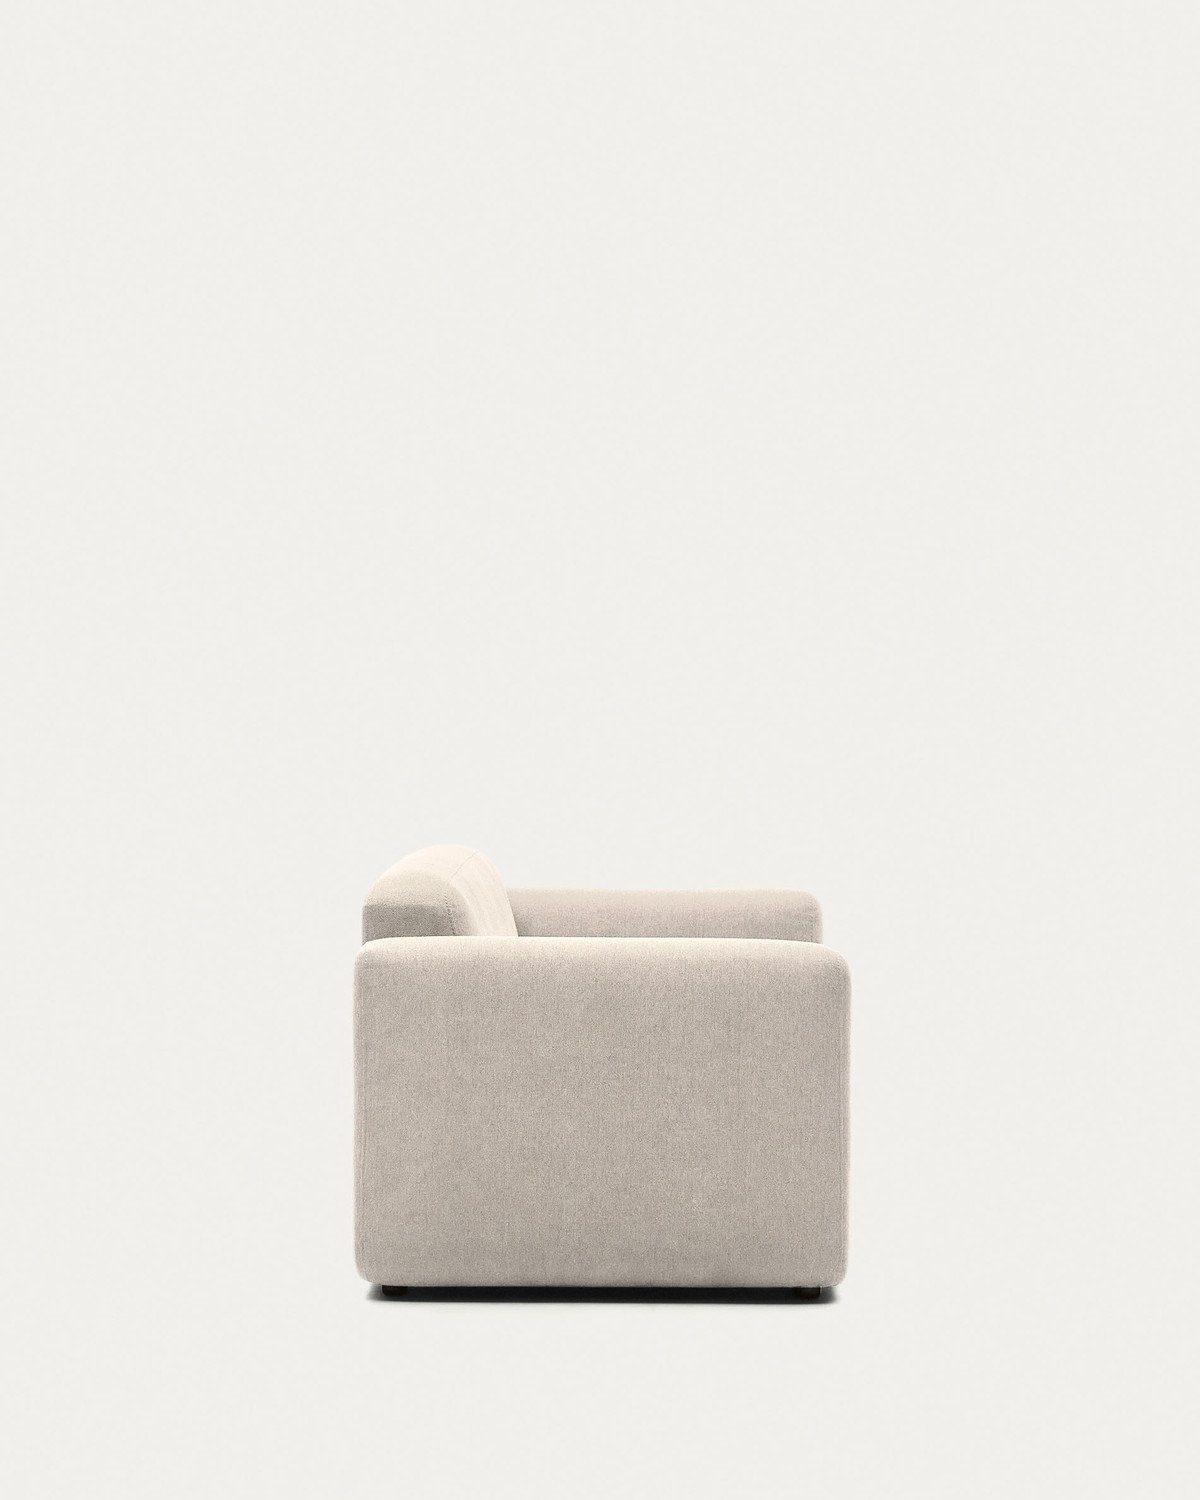 Neom 78 89 Beige cm Sofa Modulares Sitzgelegenheit Natur24 x 2-Sitzer-Sofa 188 x